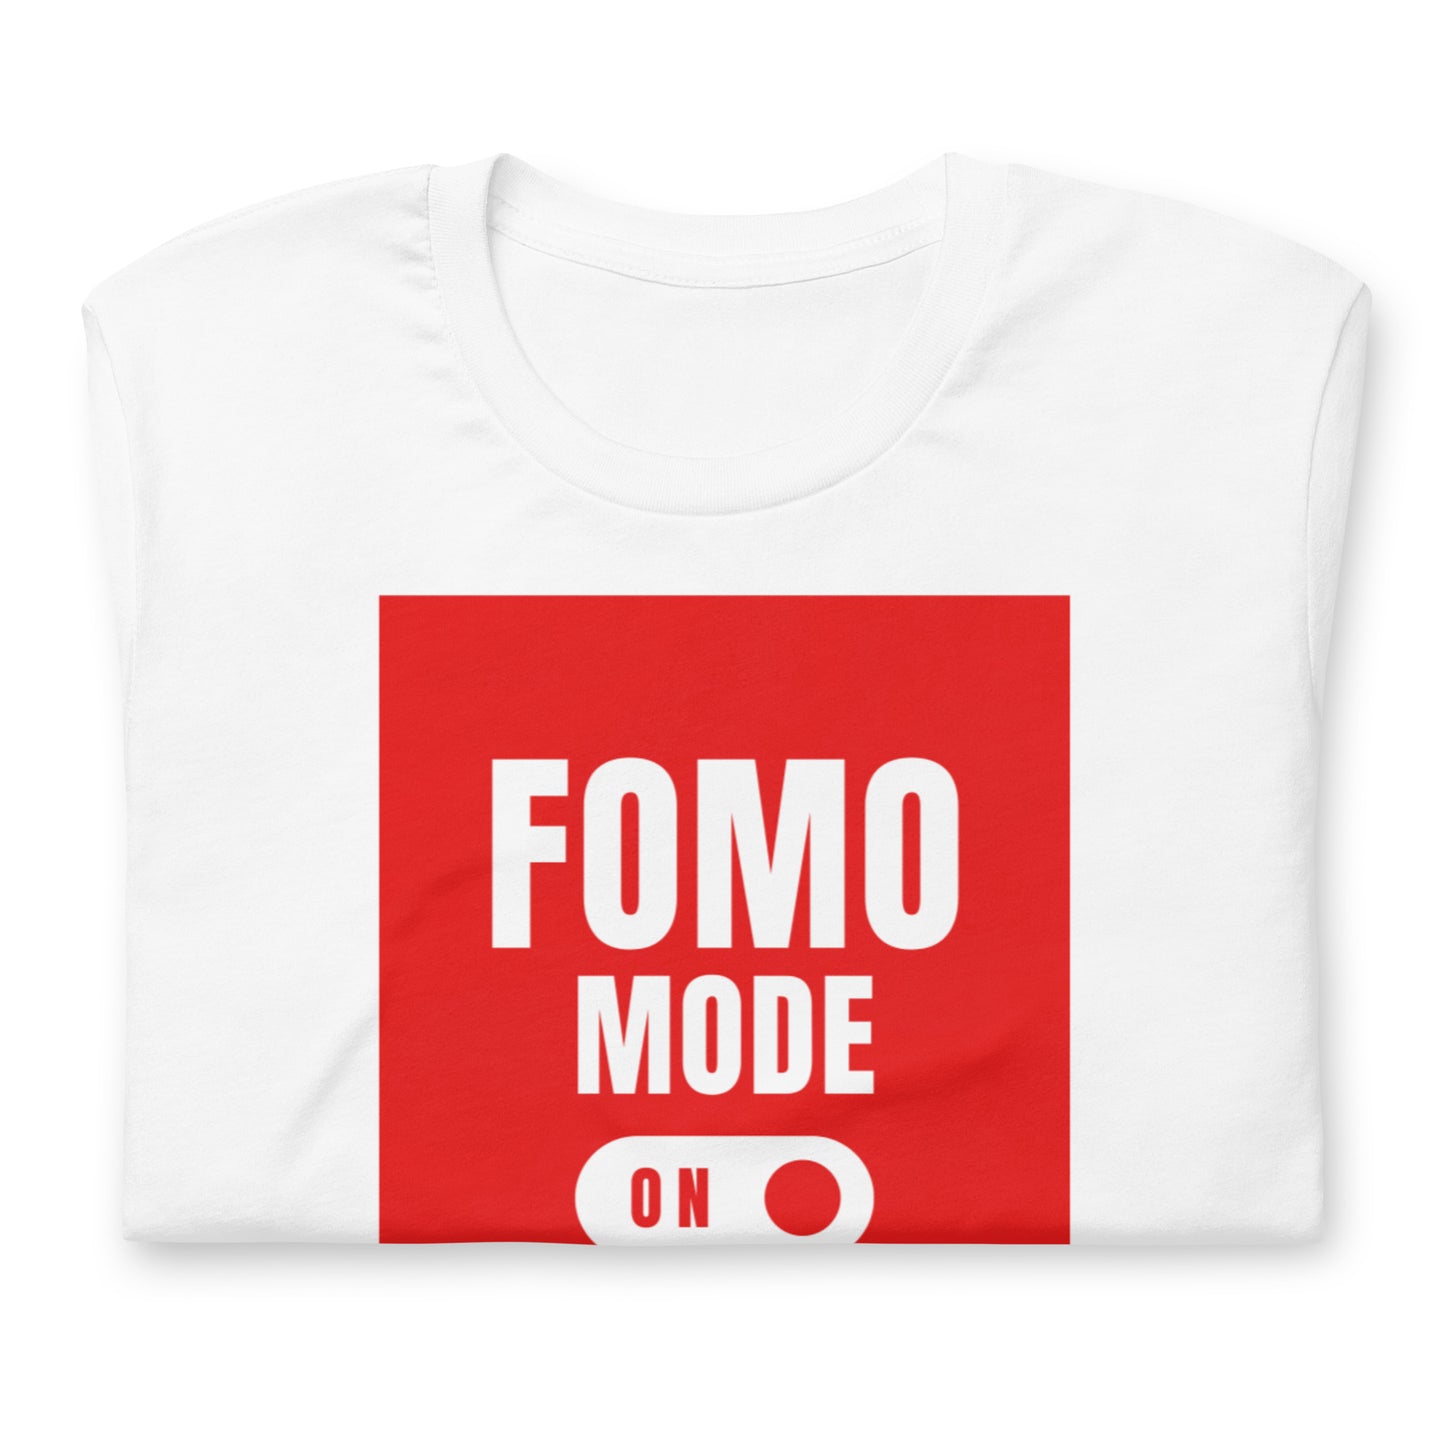 Bitcoin Fomo Mode On T-Shirt